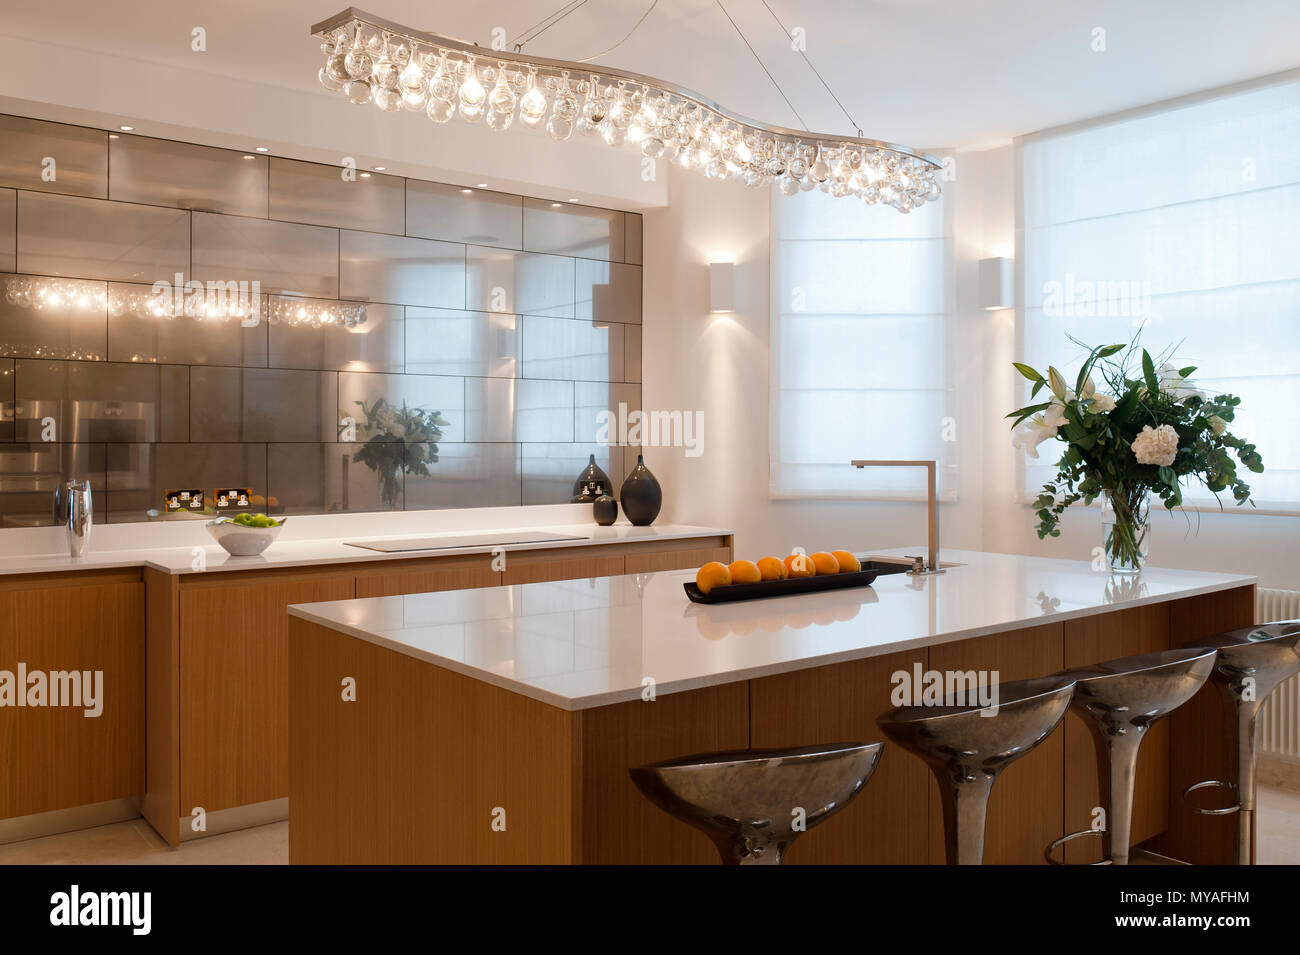 Kitchen island in contemporary kitchen Stock Photo